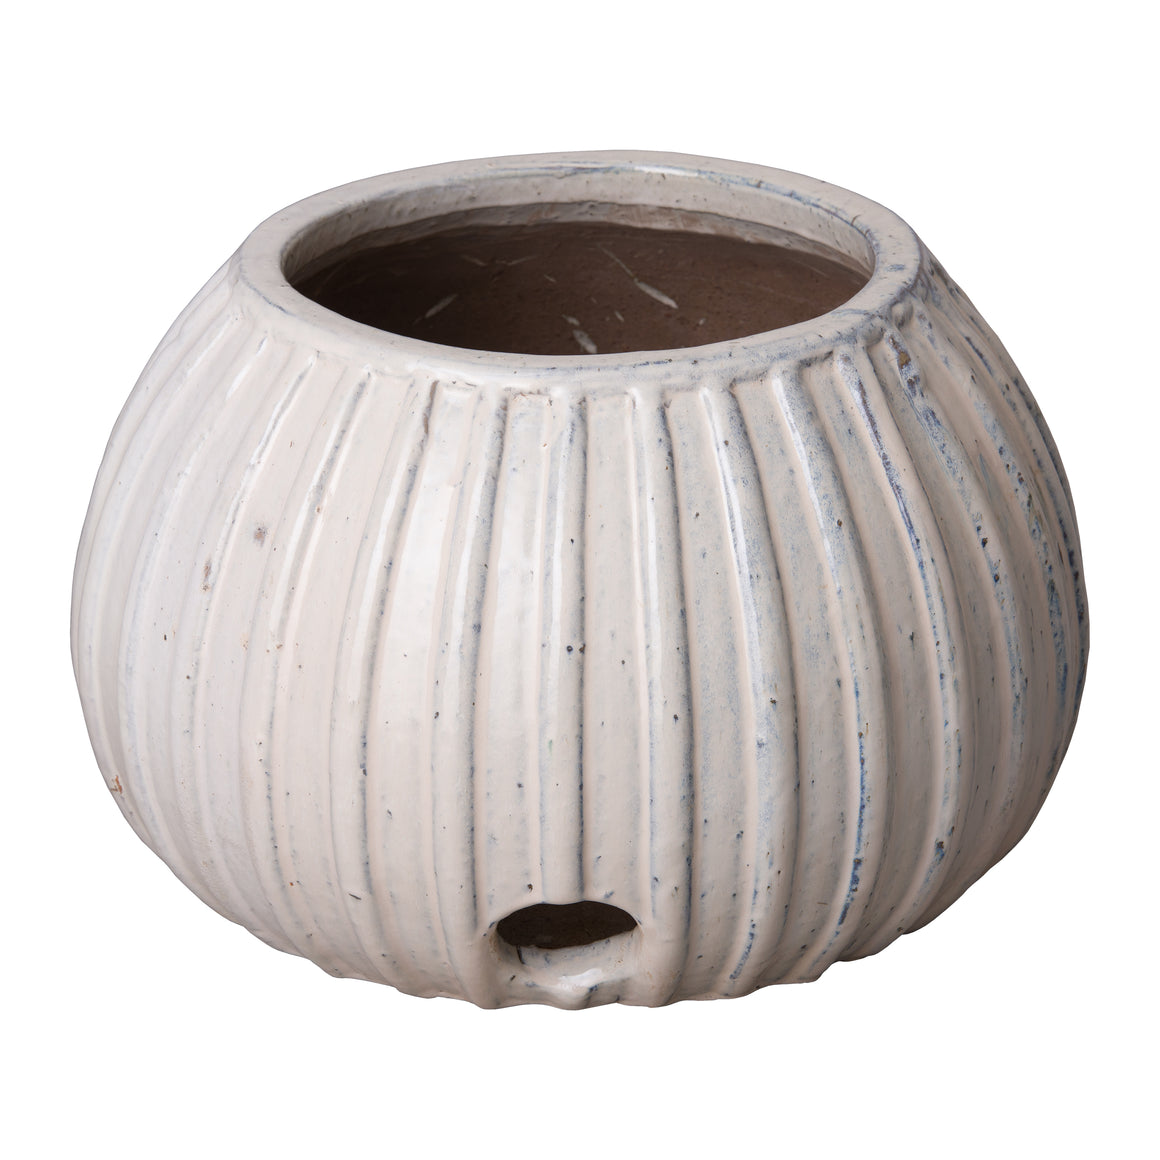 Ceramic Hose Container with a Distressed White Glaze